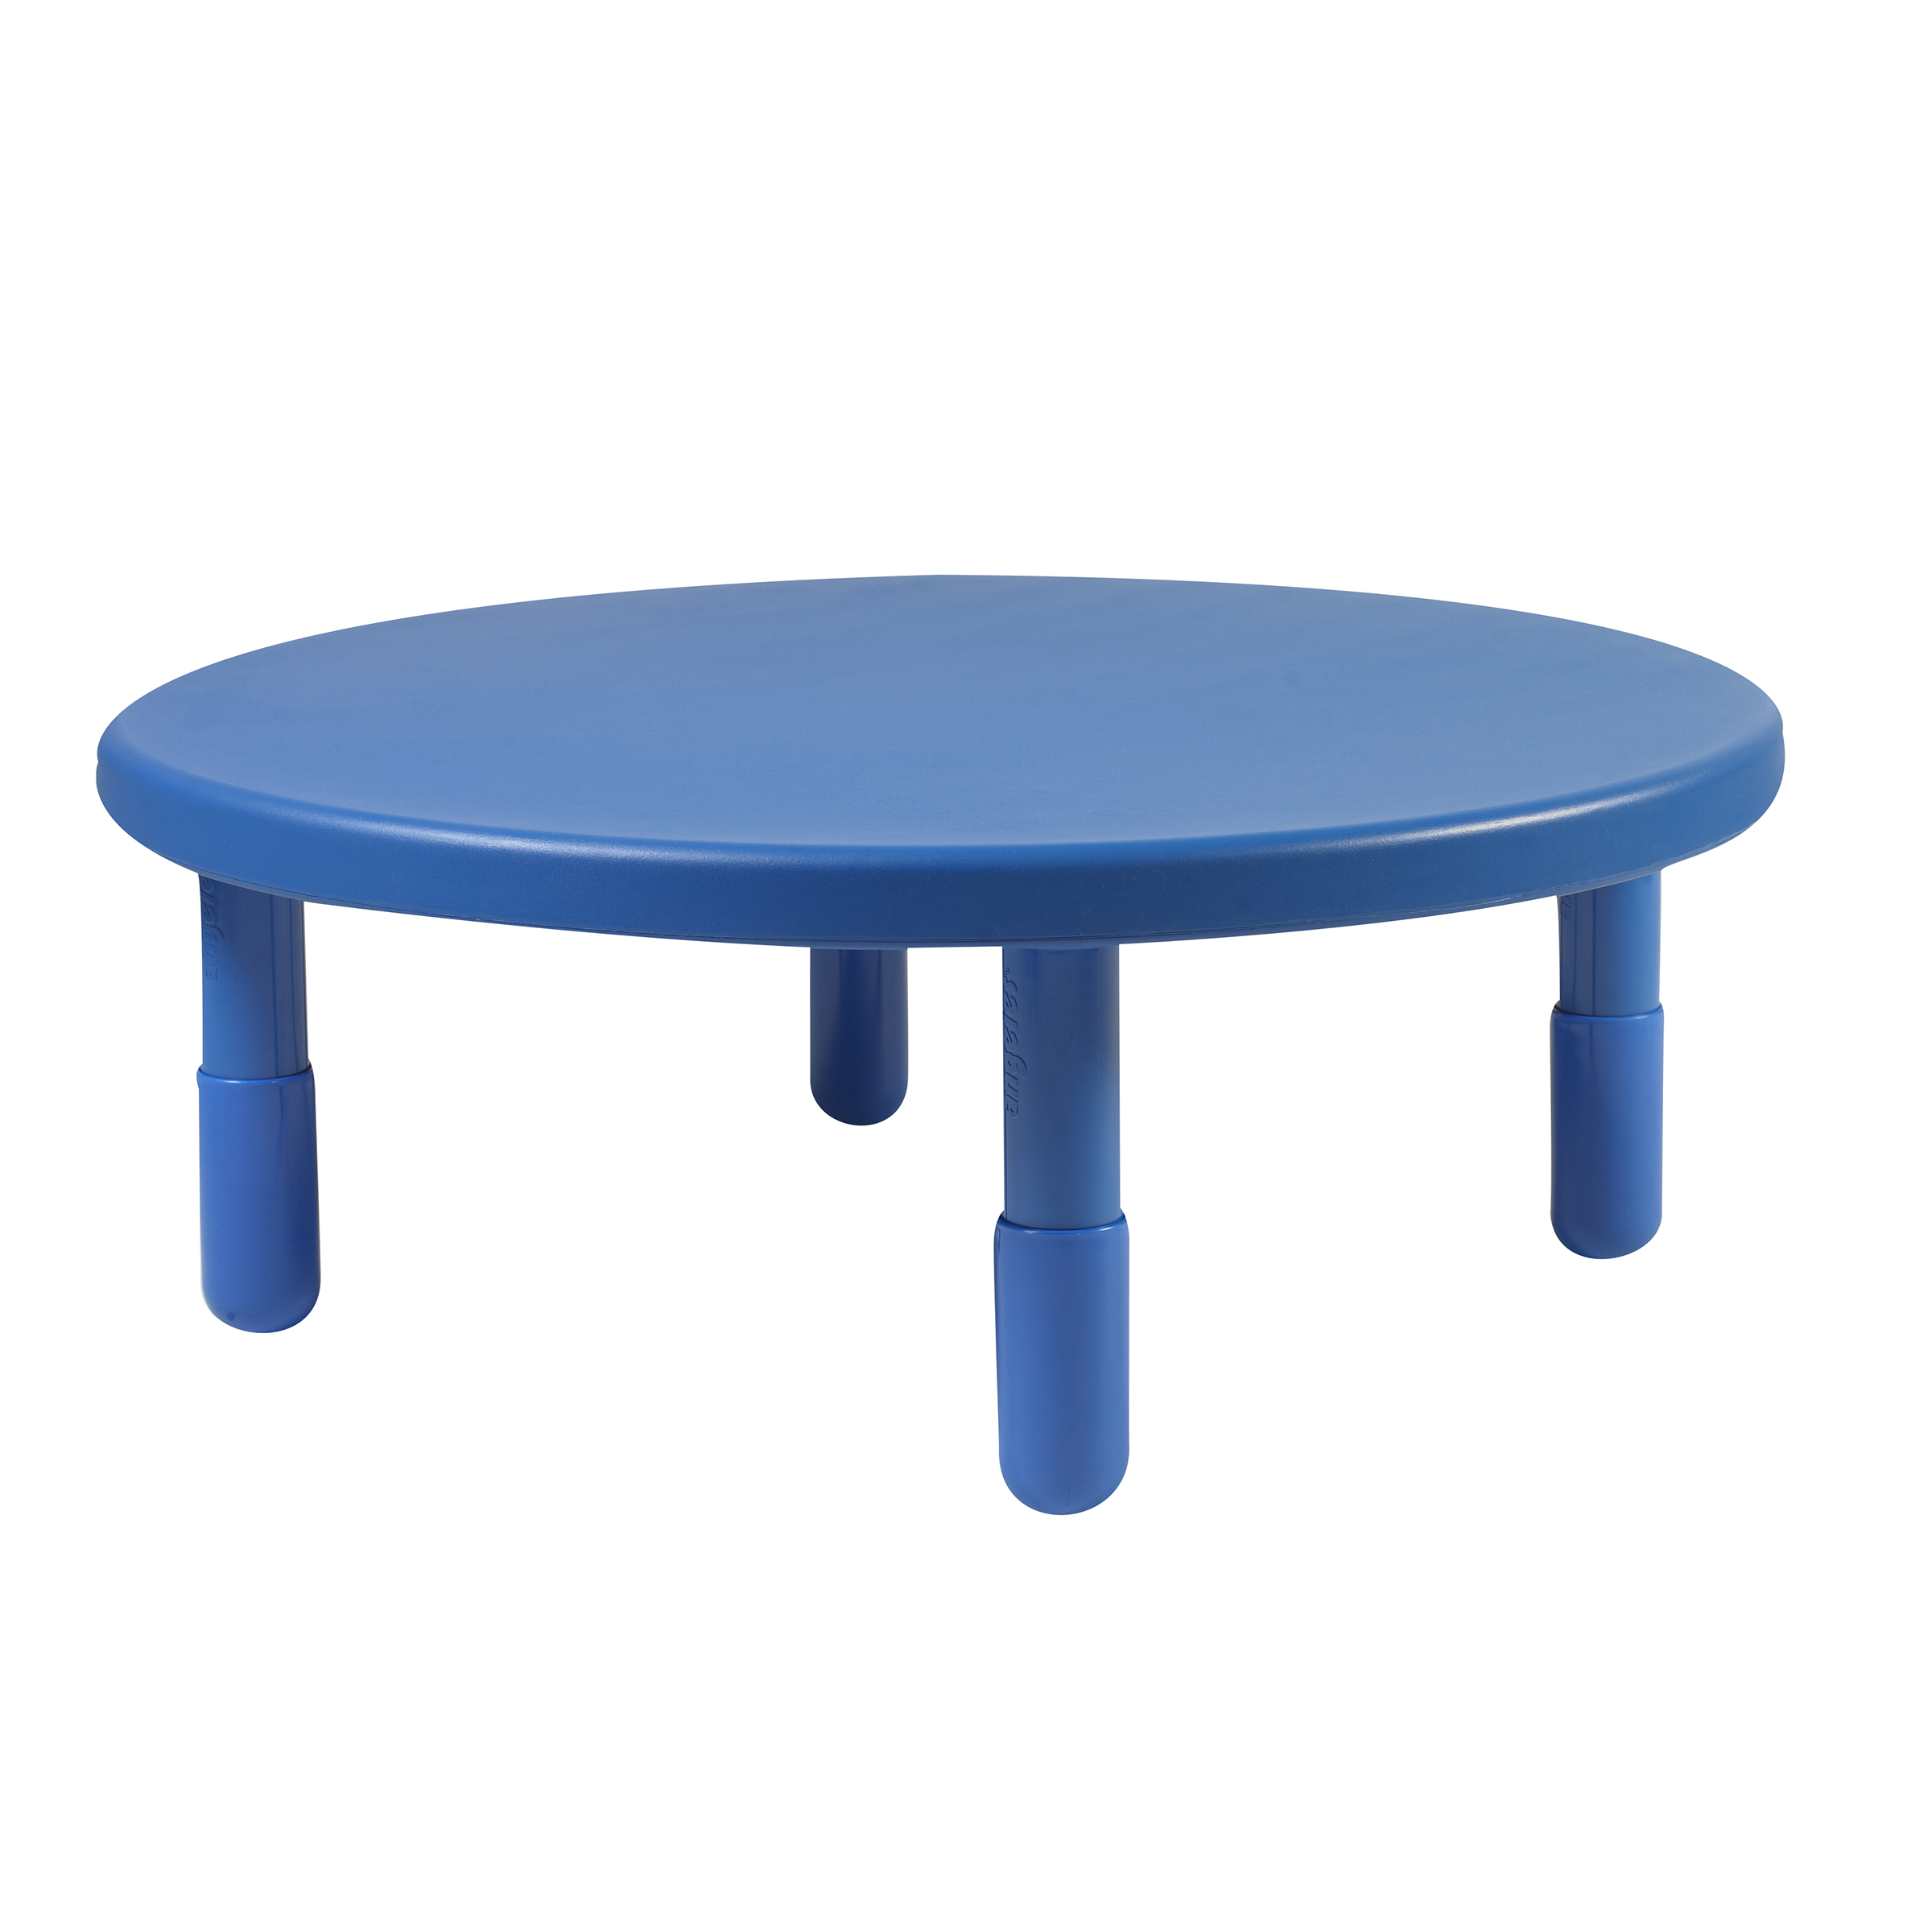 Value 91,5 cm  Diameter Round Table - Royal Blue with 35,5 cm  Legs